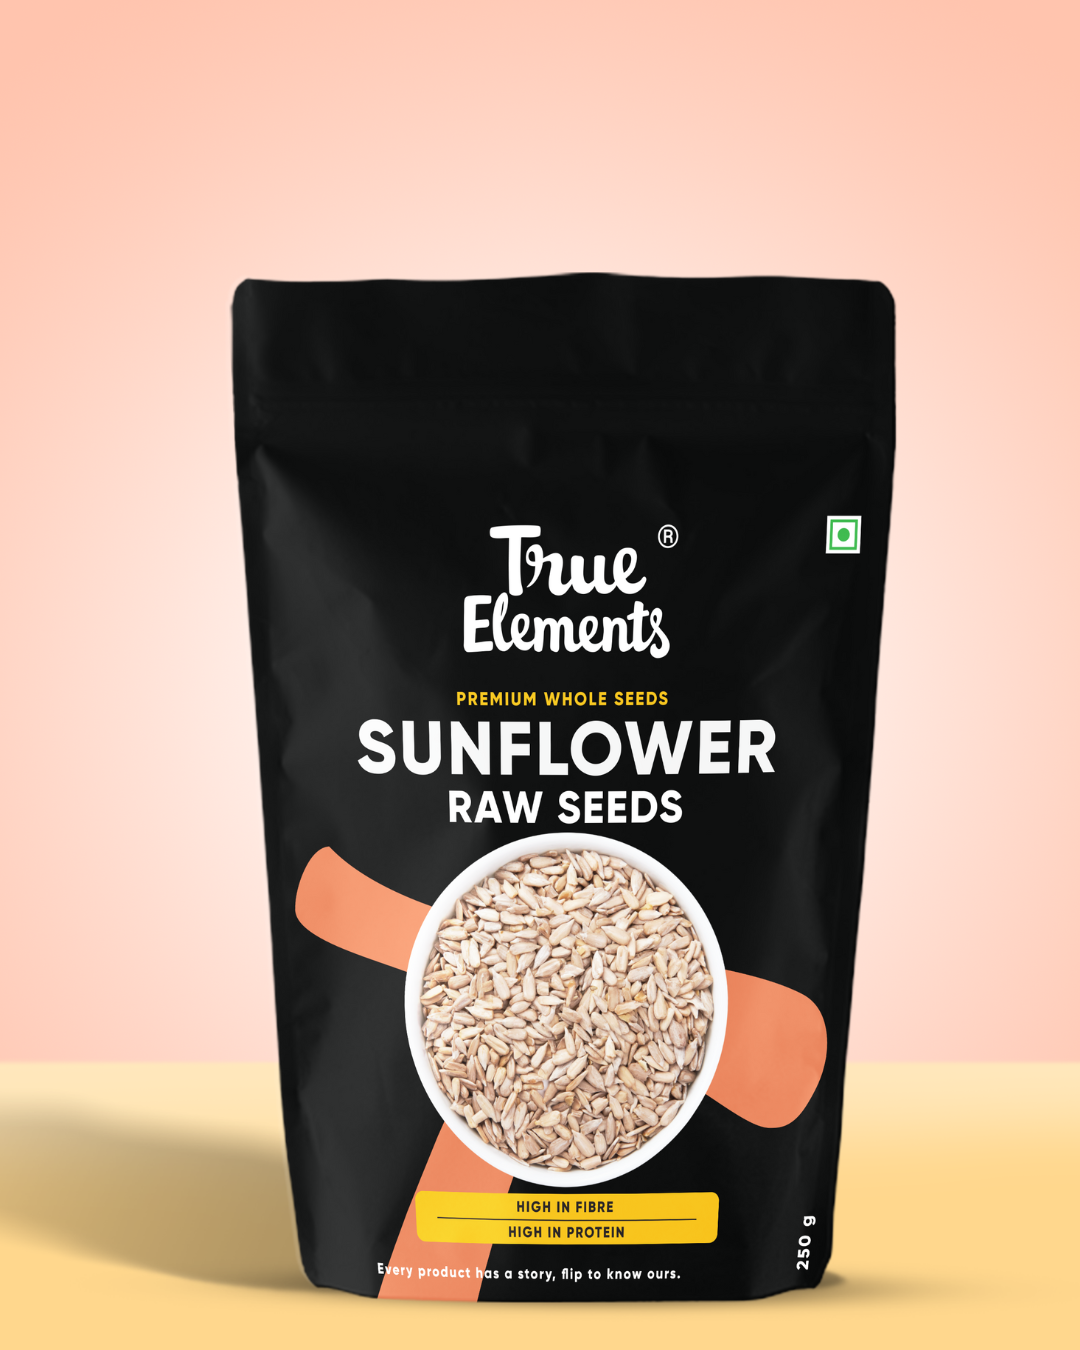 True elements raw sunflower seeds 250g Pouch (Premium Whole Seeds)